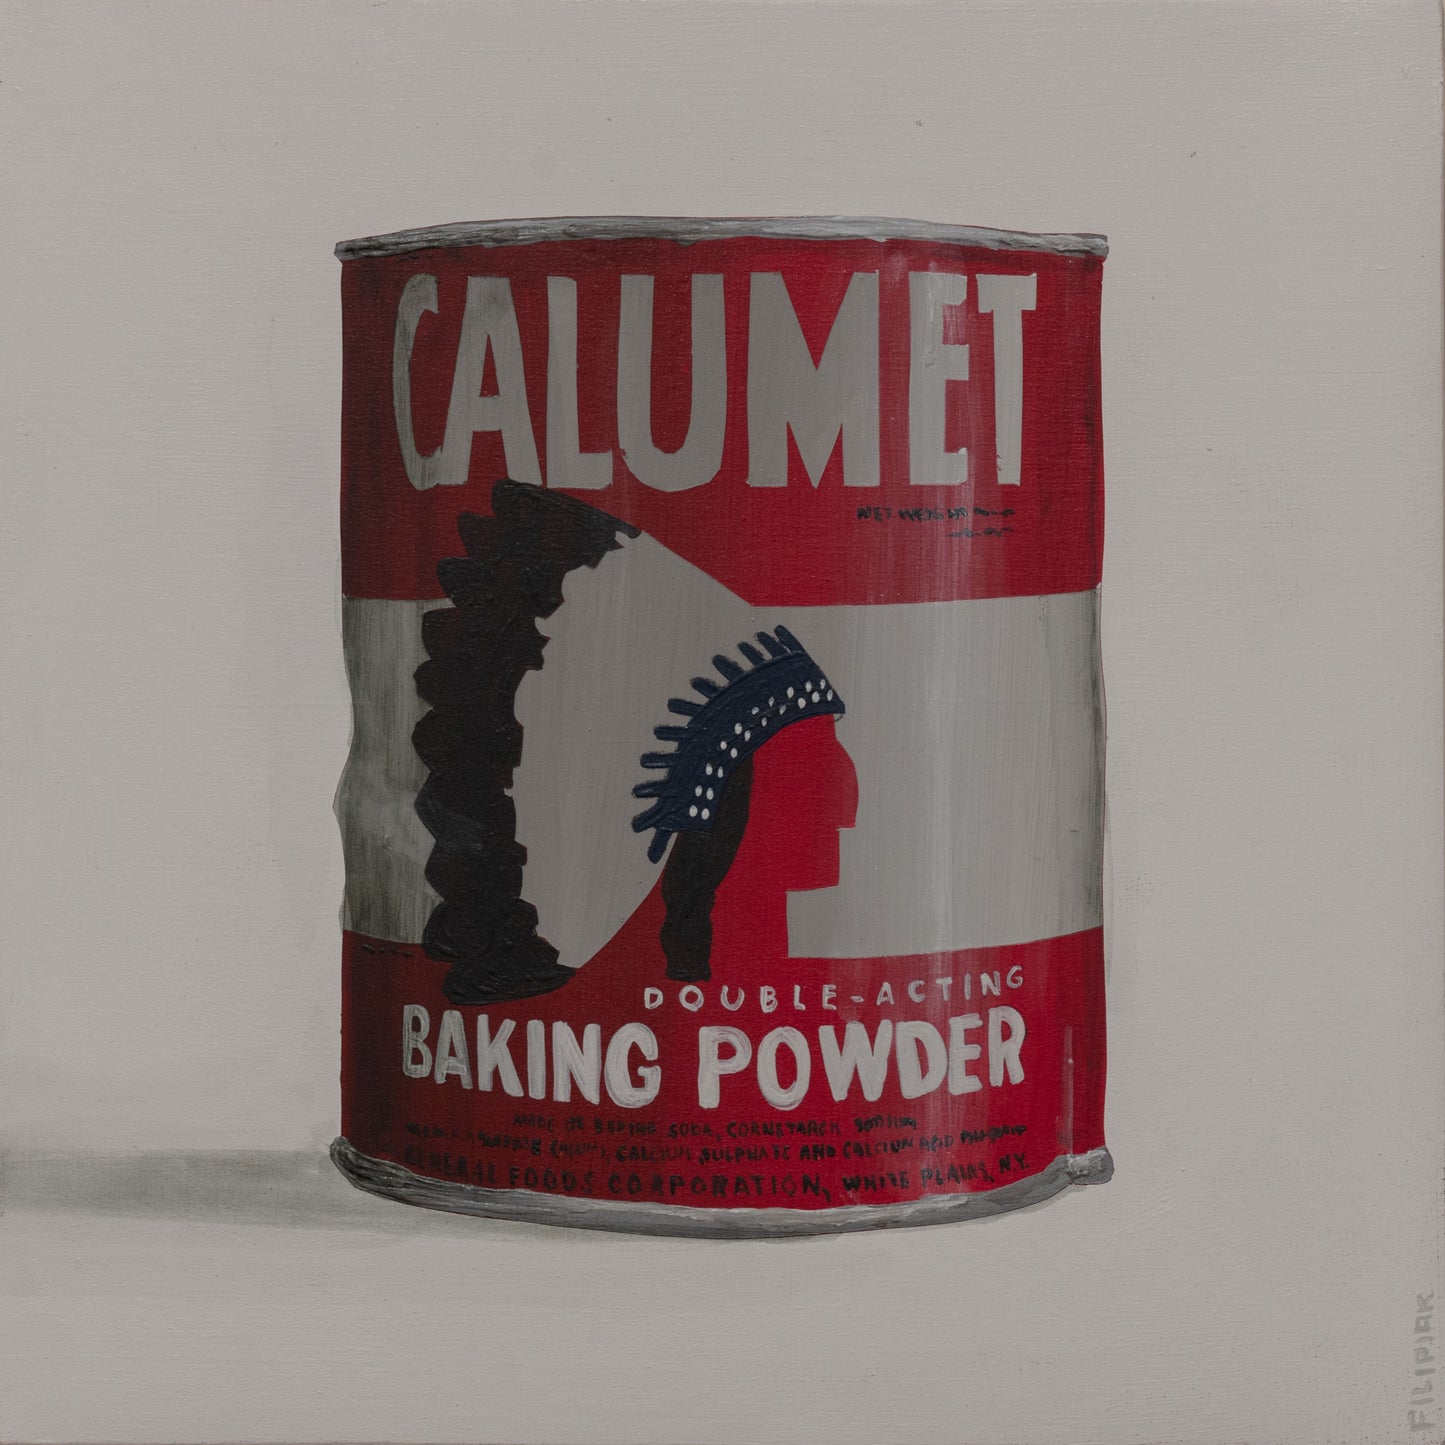 Calumet Baking Powder